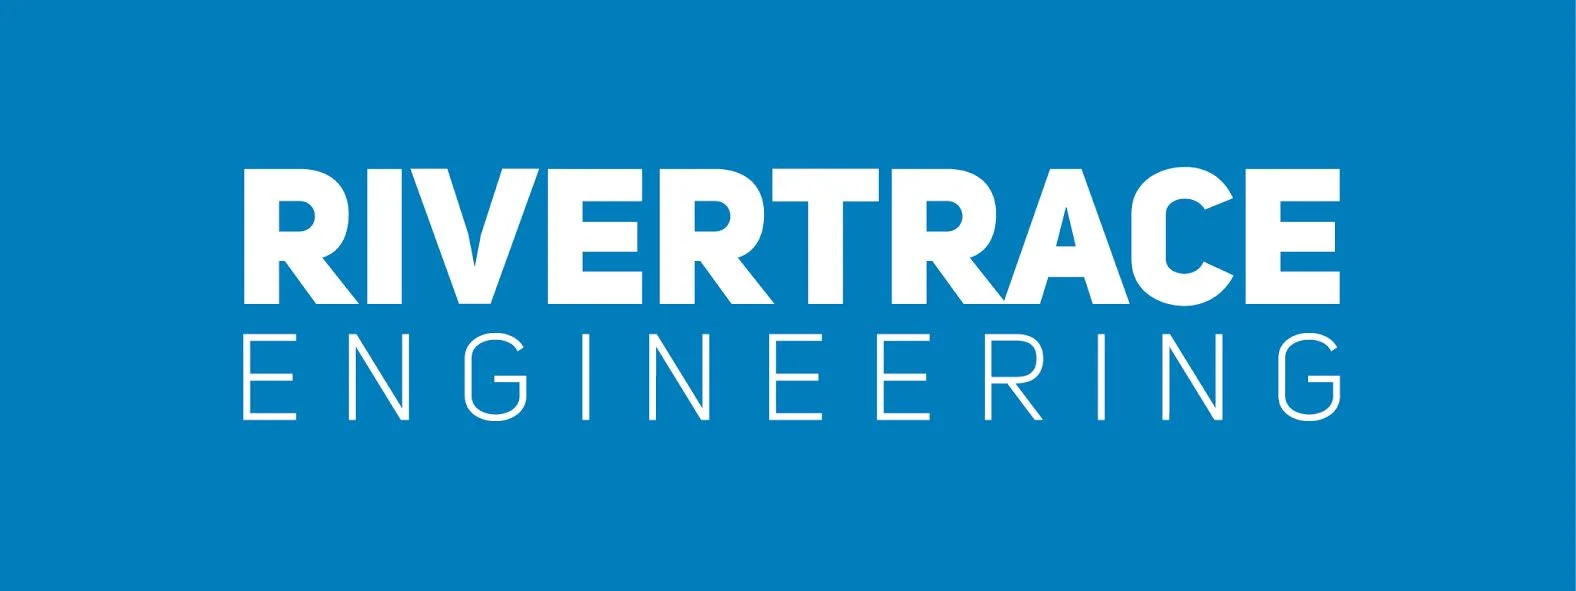 Rivertrace Engineering